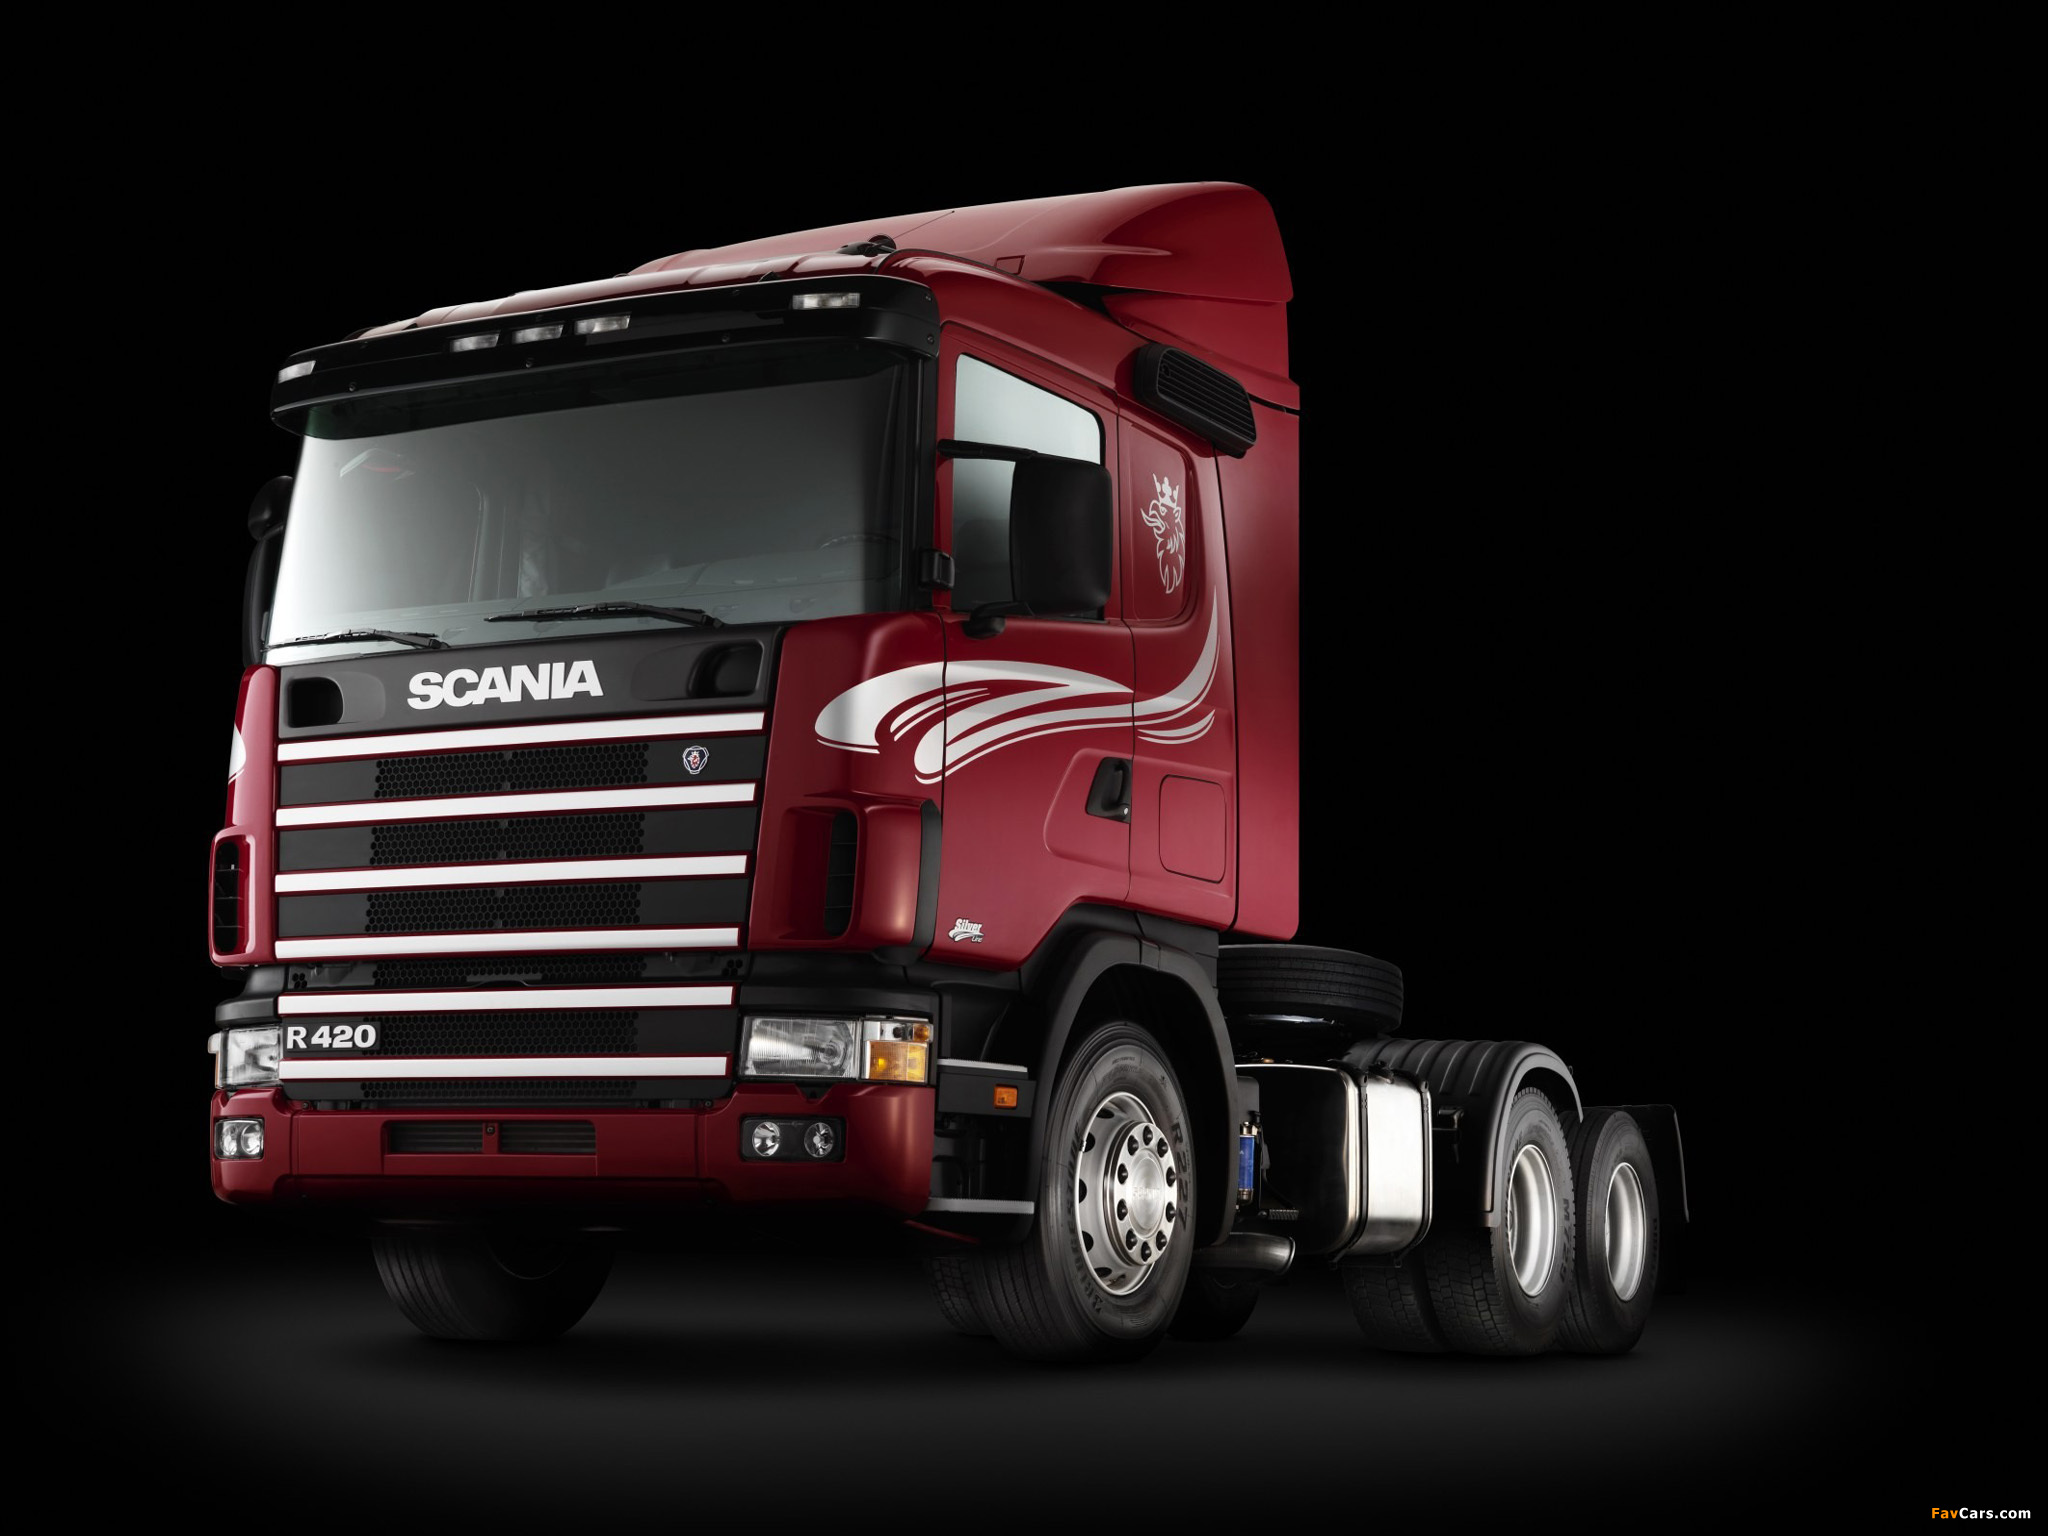 Scania p series